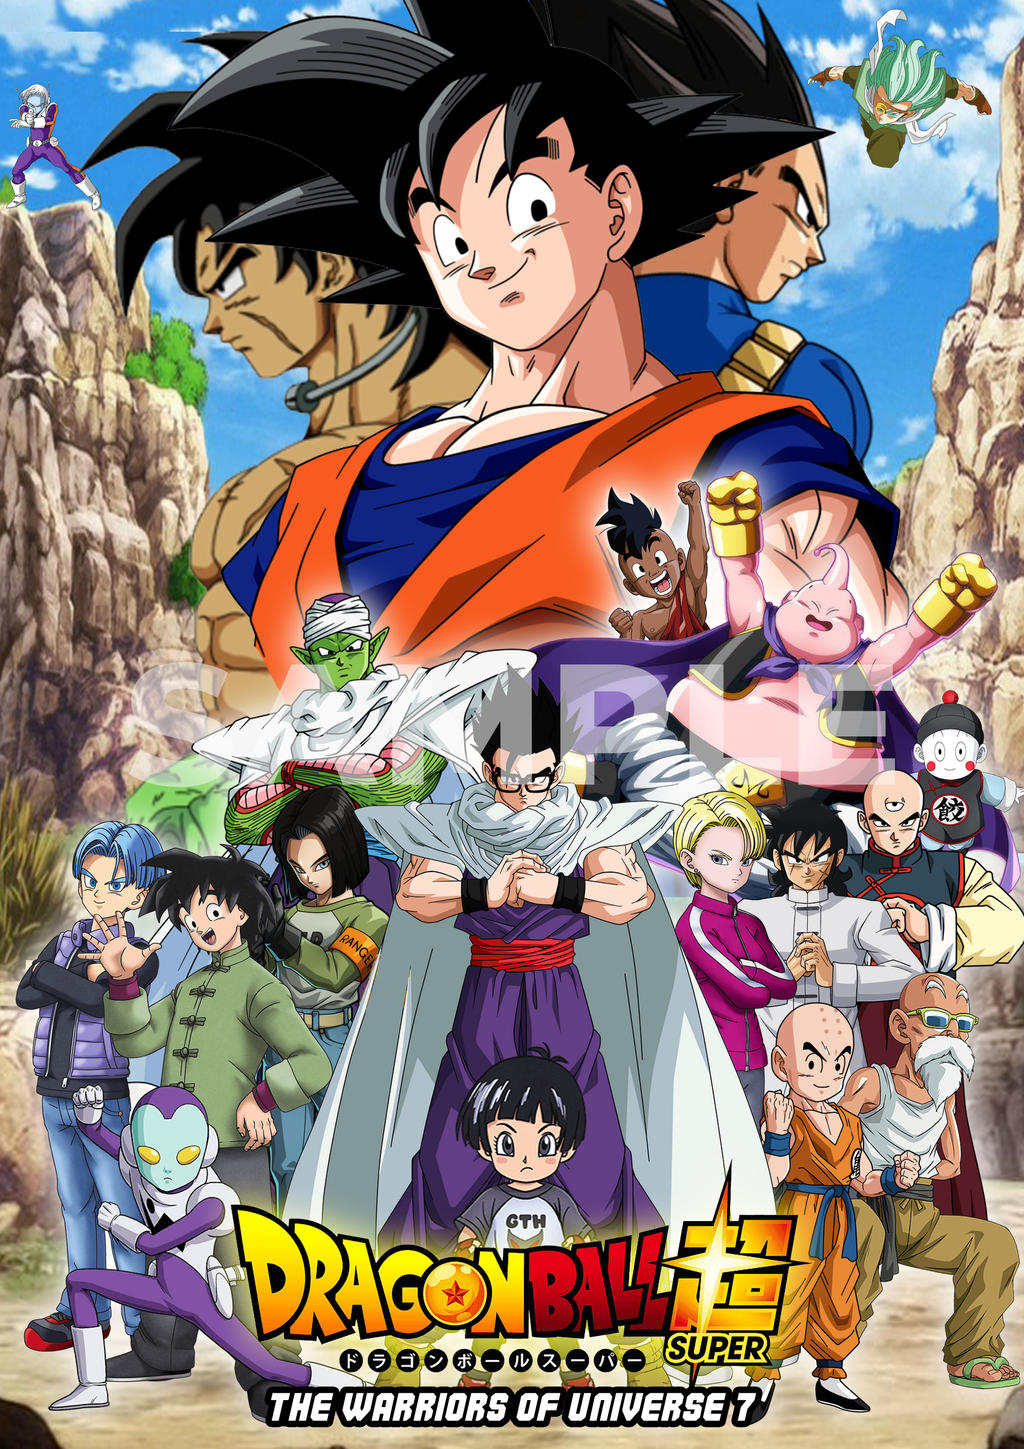 Dragon Ball Super- Universe 7 Fighters – Tournament Of Power – AnimeWorldDbN